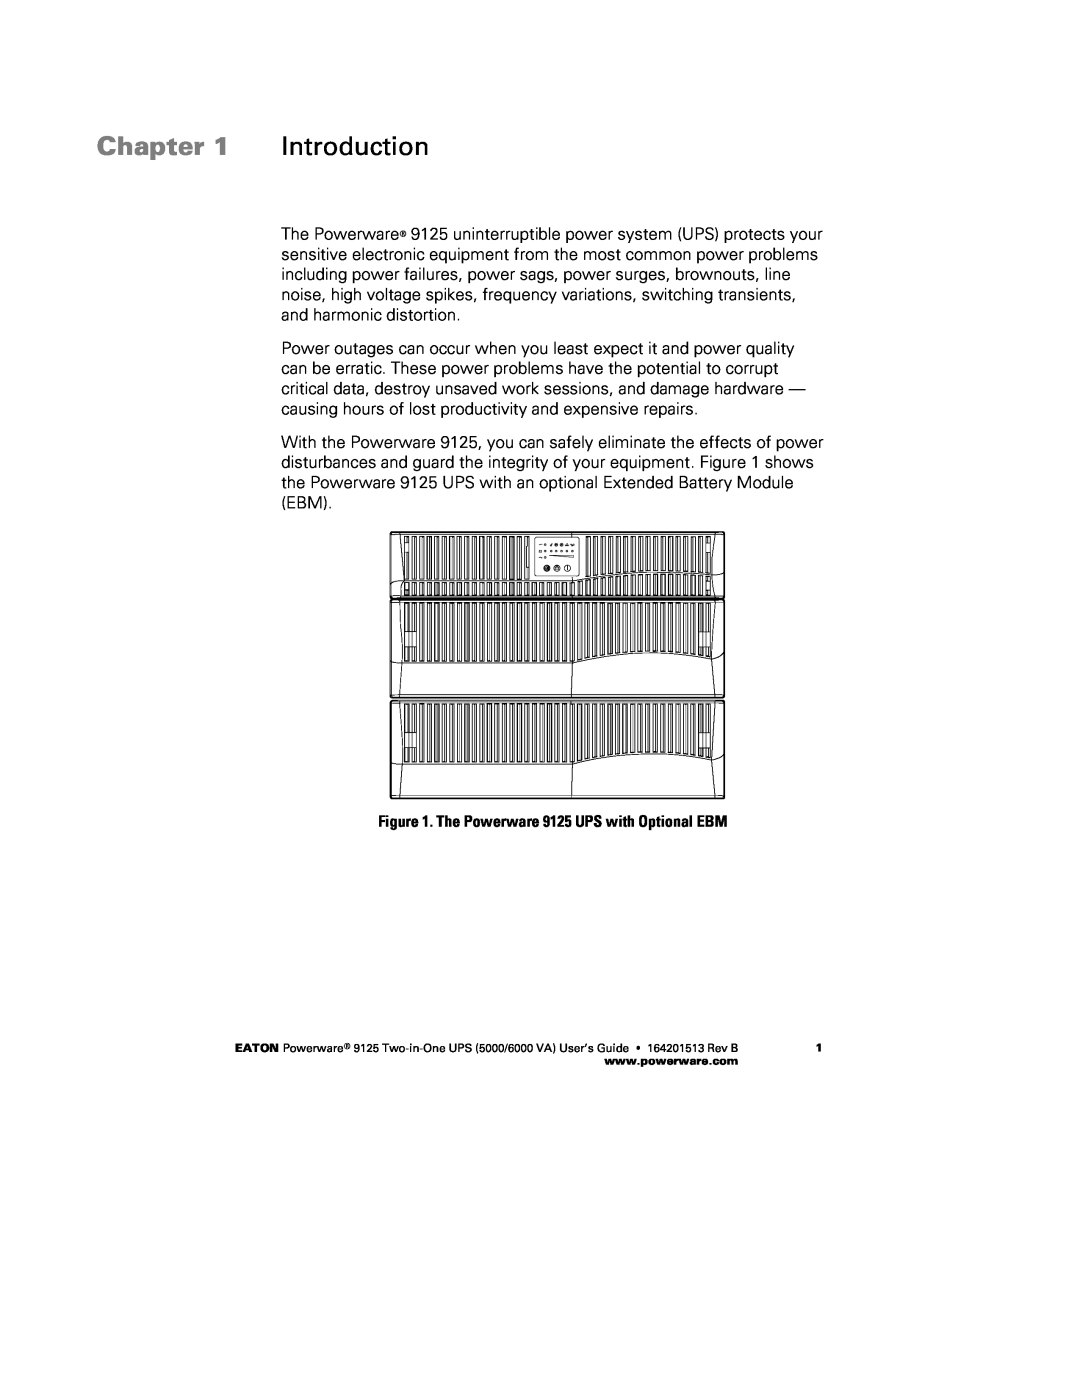 Powerware 6000 VA, 5000 manual Chapter, Introduction, The Powerware 9125 UPS with Optional EBM 